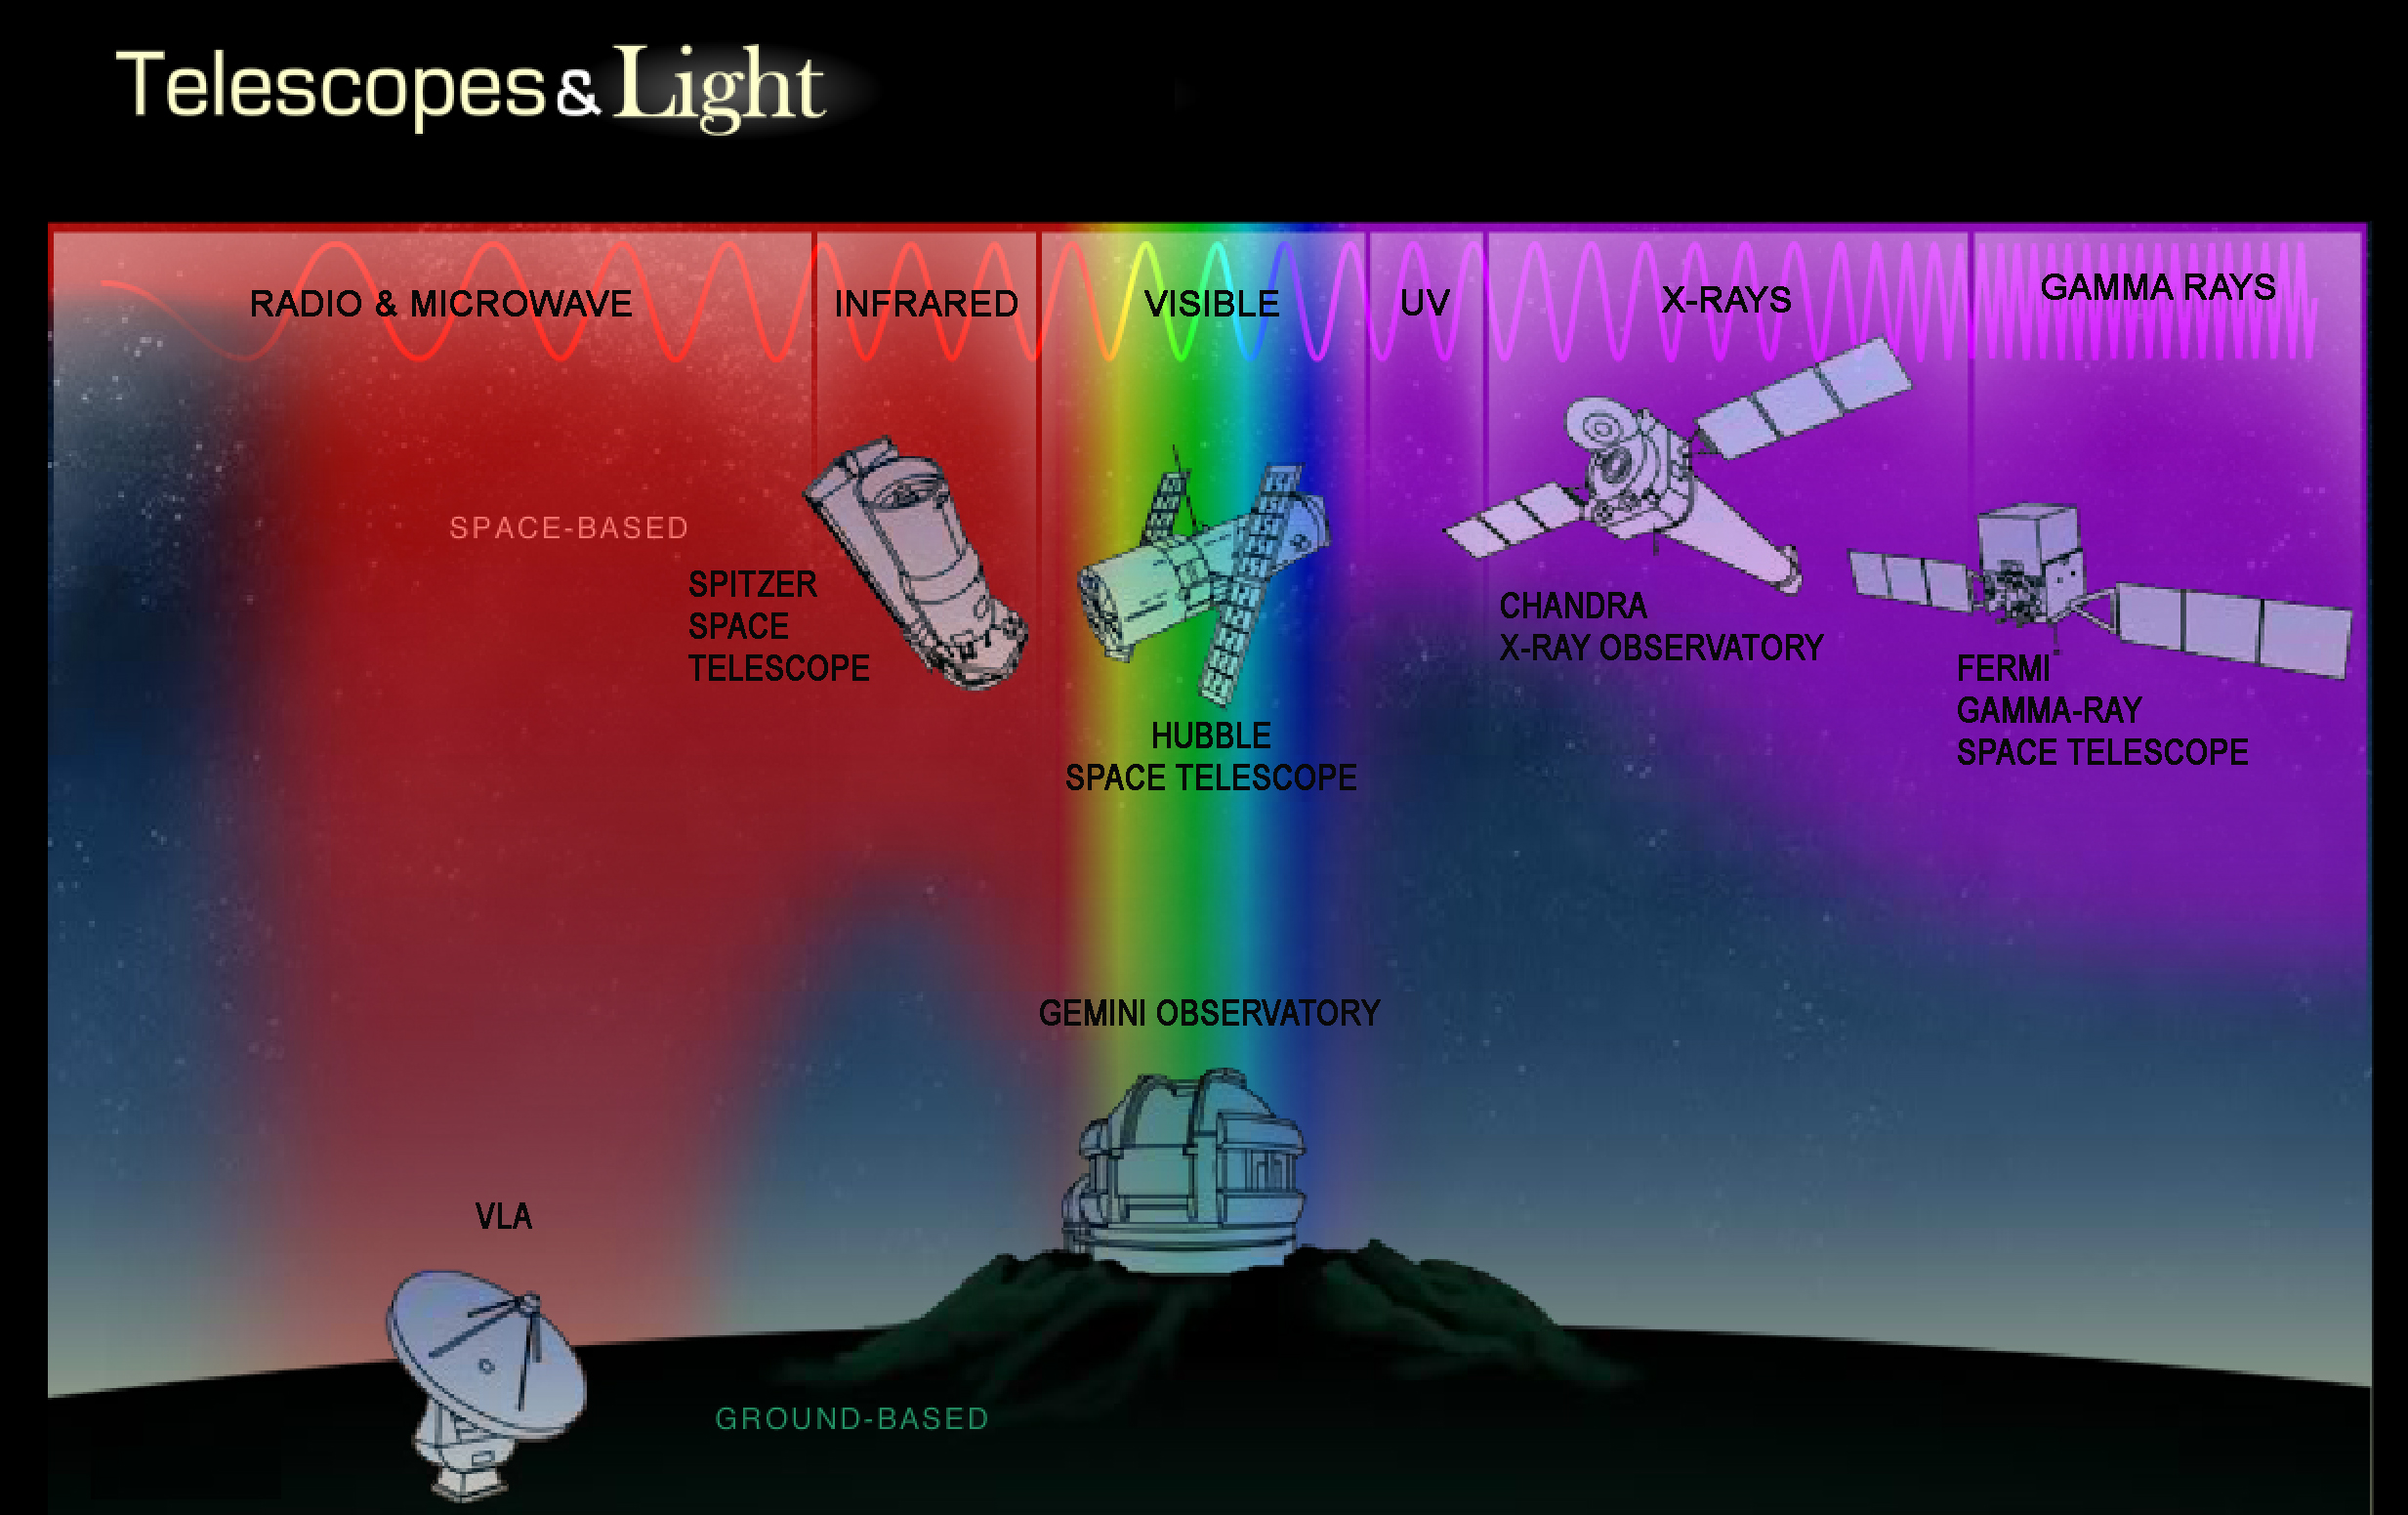 <ul><li><p><strong>Radio telescopes</strong> can be at <strong>sea level</strong>.</p></li><li><p><strong>Infrared telescopes</strong> need to located atop <strong>high mountains</strong>.</p></li><li><p><strong>UV and X-ray telescopes</strong> need to be located in <strong>space</strong>.</p></li></ul>